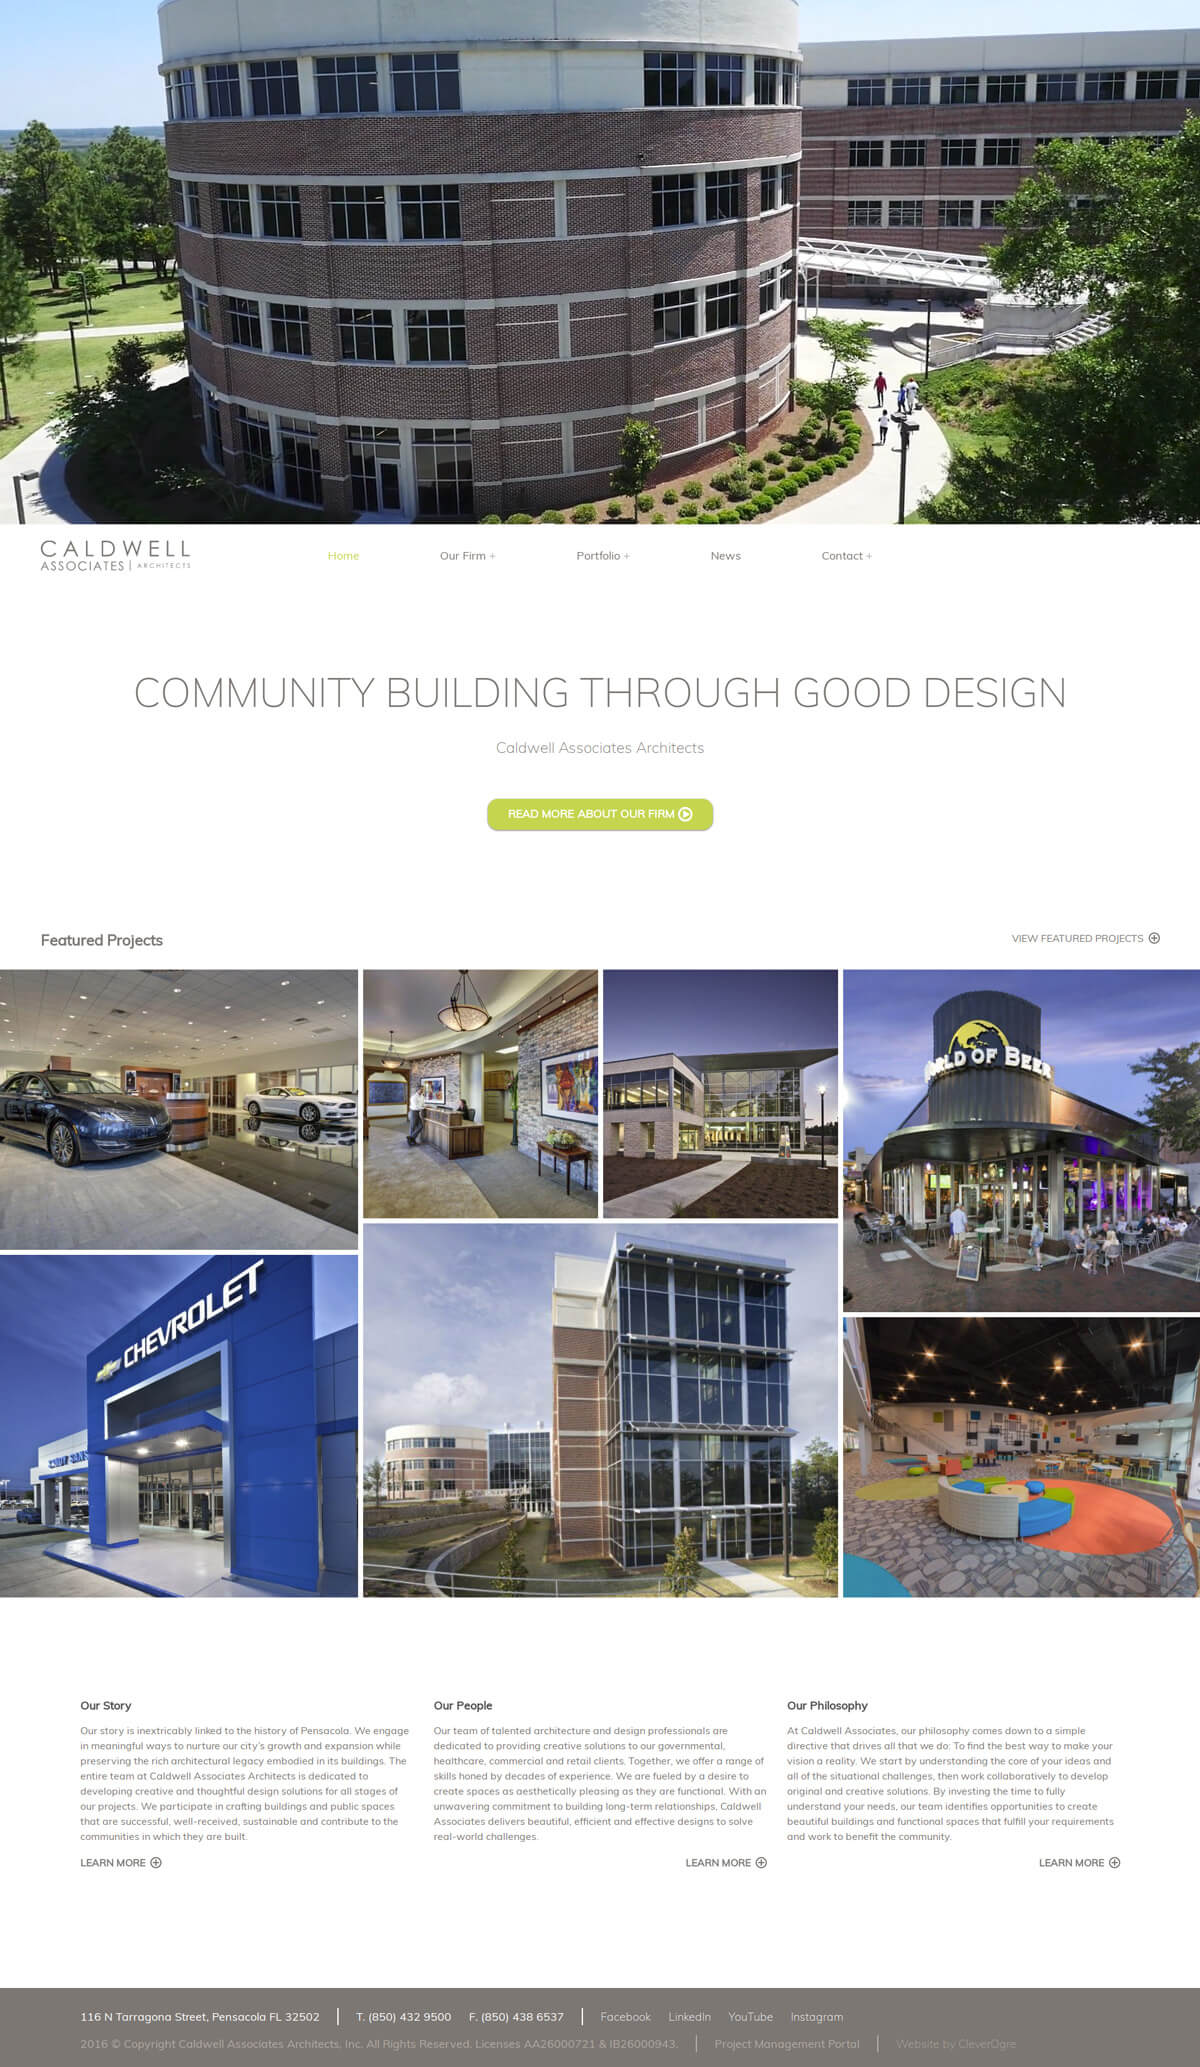 Caldwell-Associates-Architects-in-Pensacola-Florida